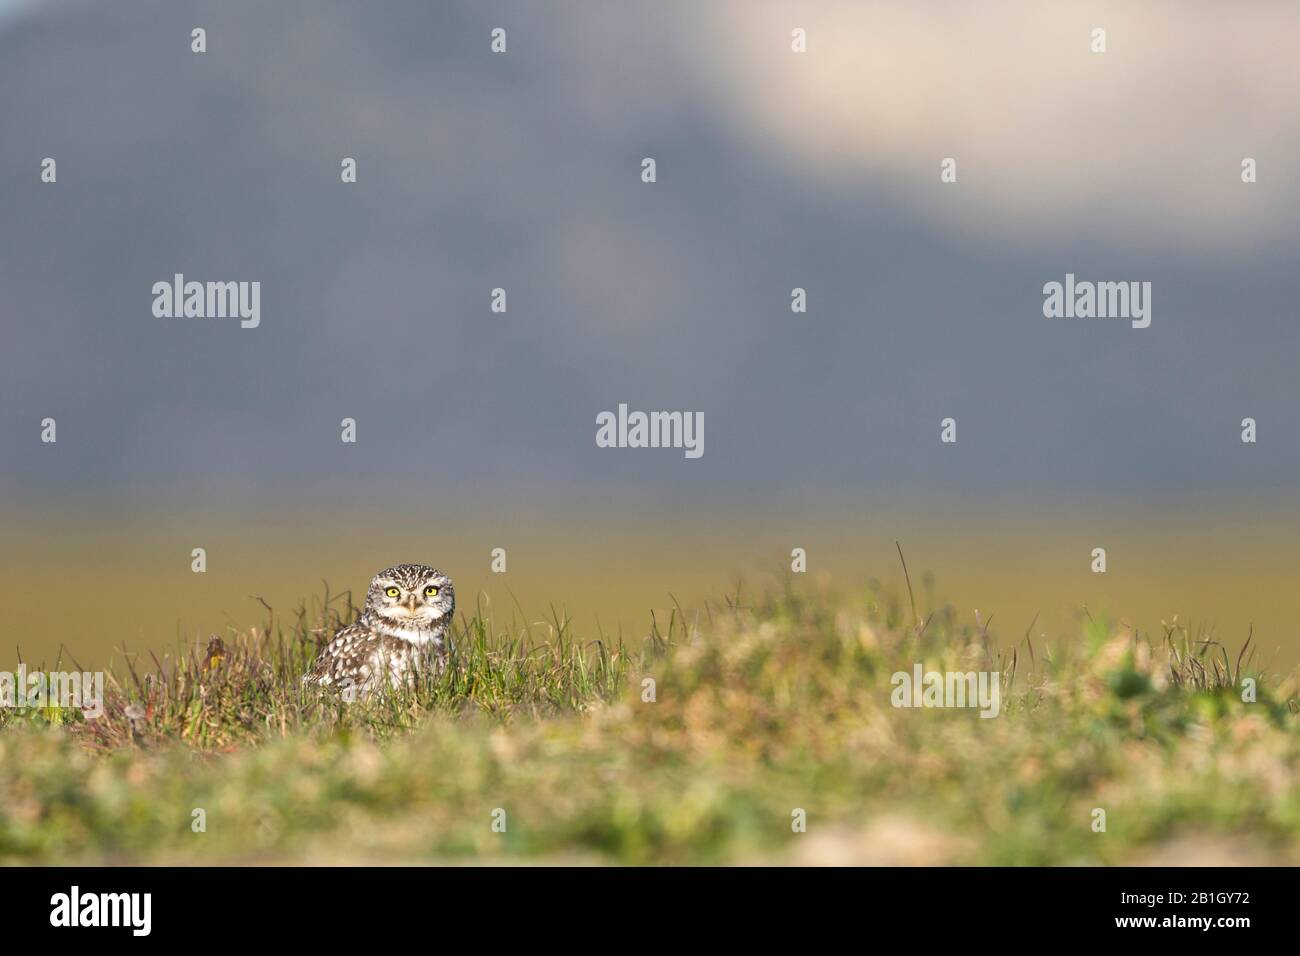 West European Little Owl (Athene noctua vidalii, Athene vidalii), male on the ground, Spain Stock Photo